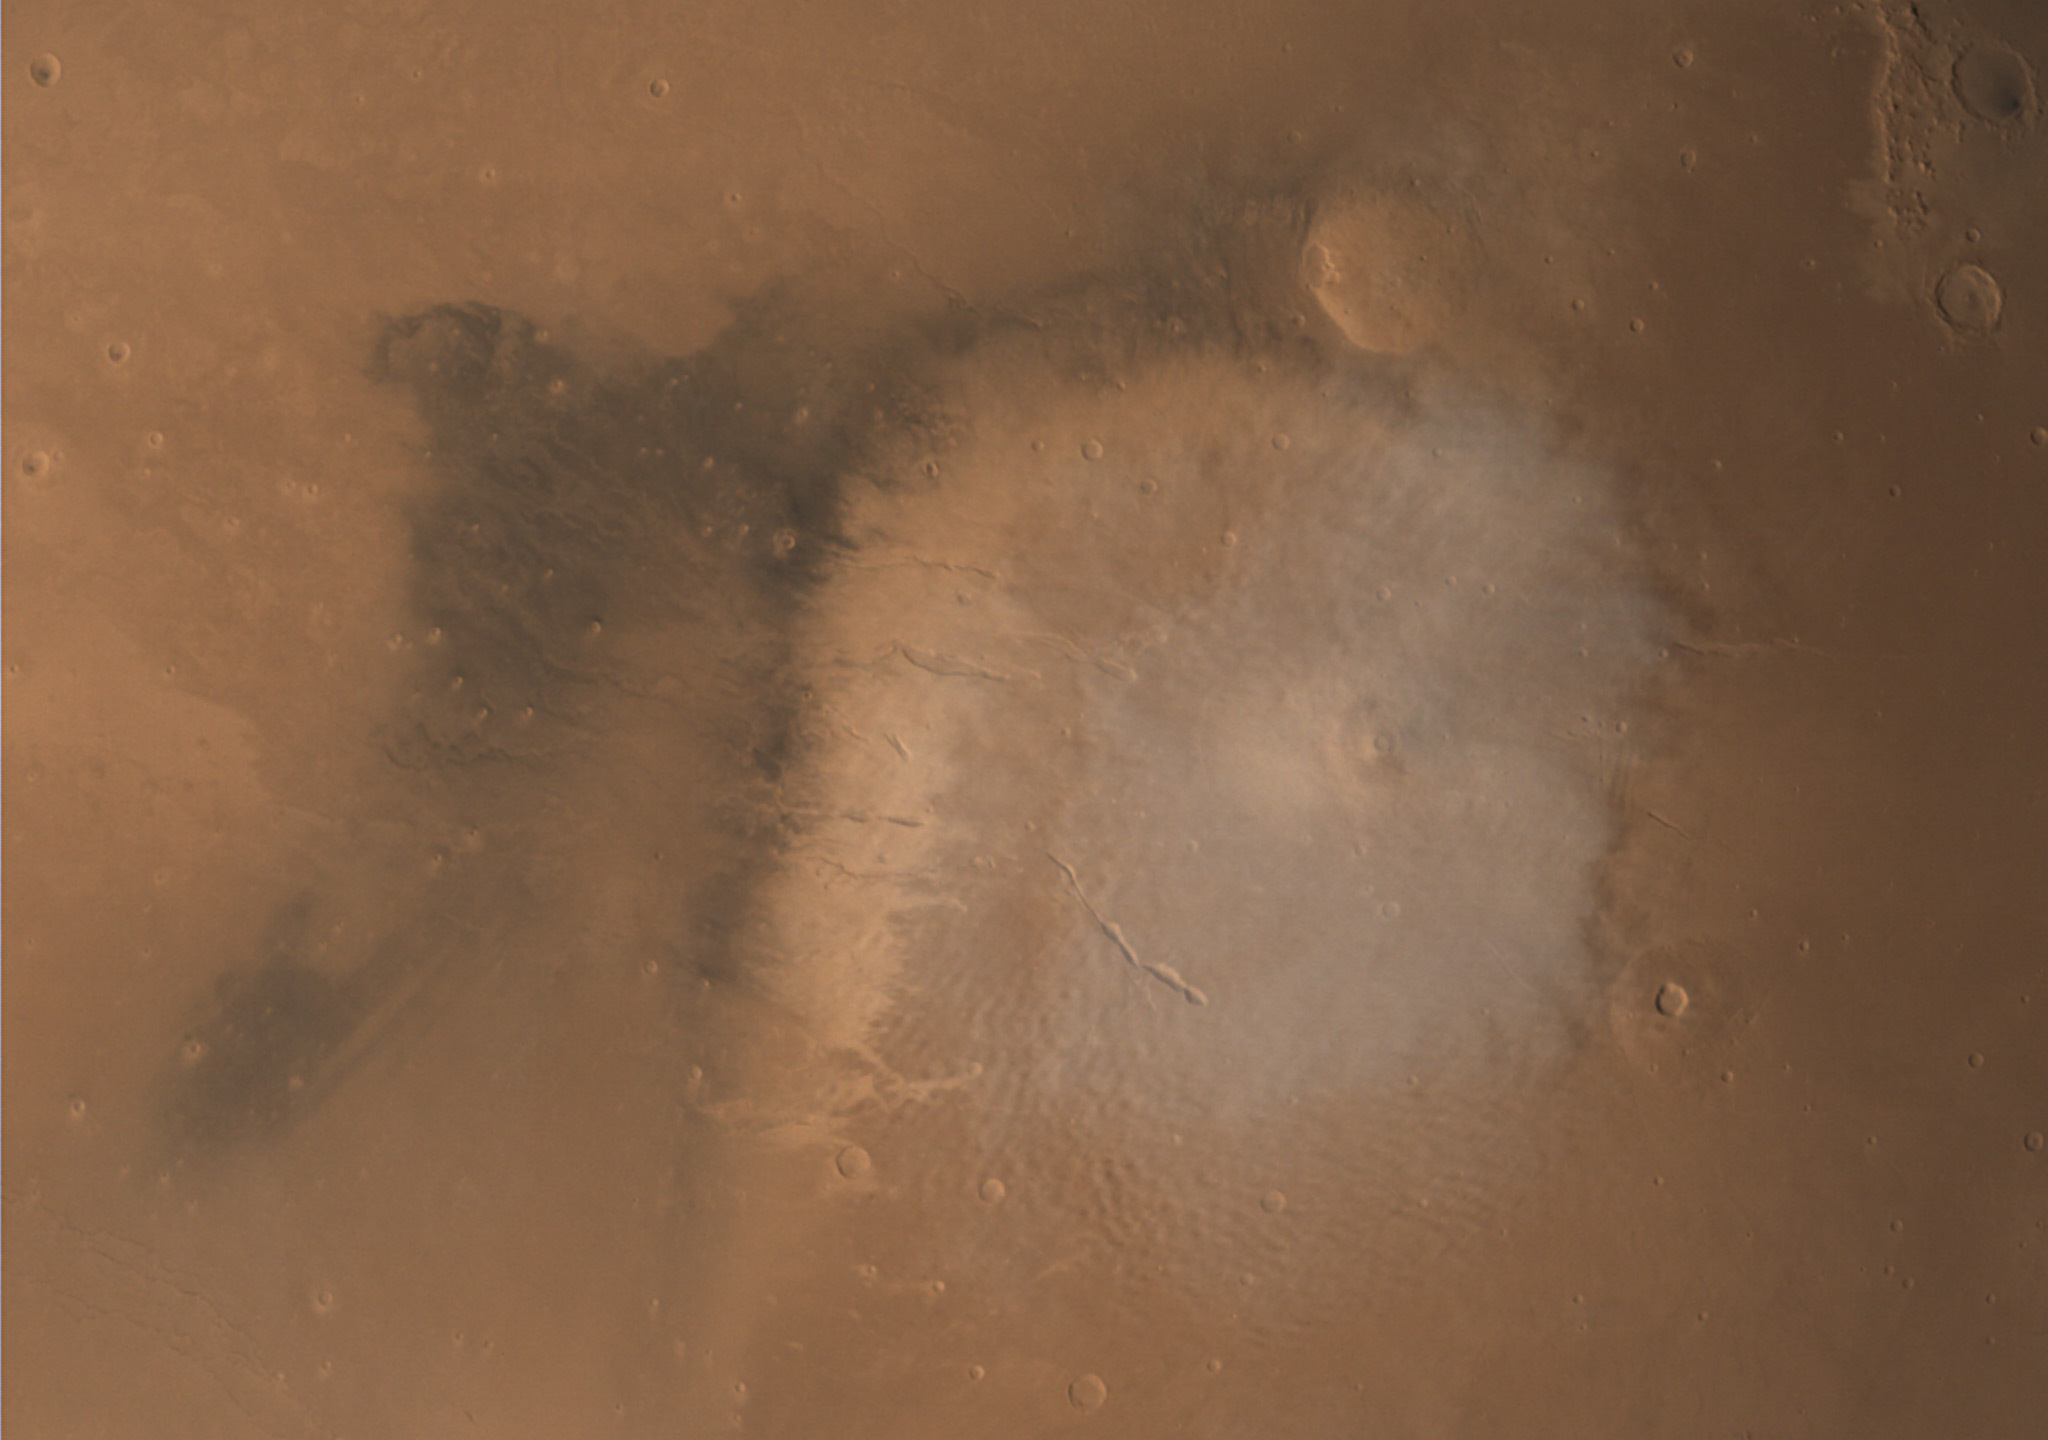 Elysium Mons - volcano on Mars